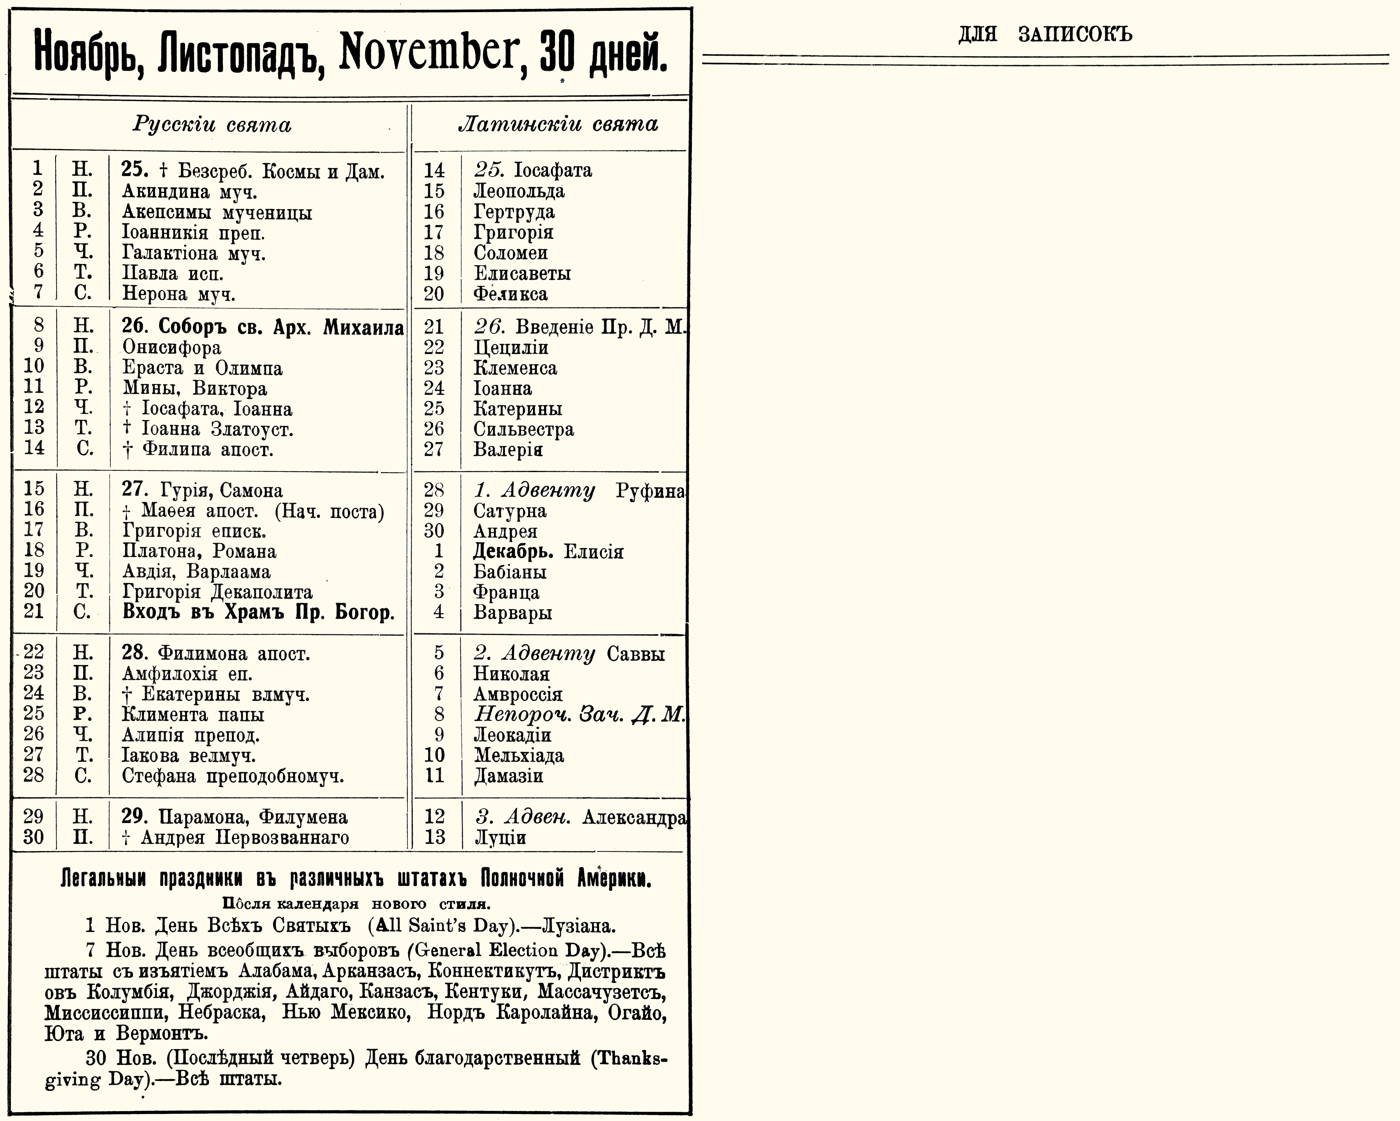 Orthodox Church Calendar, November 1915